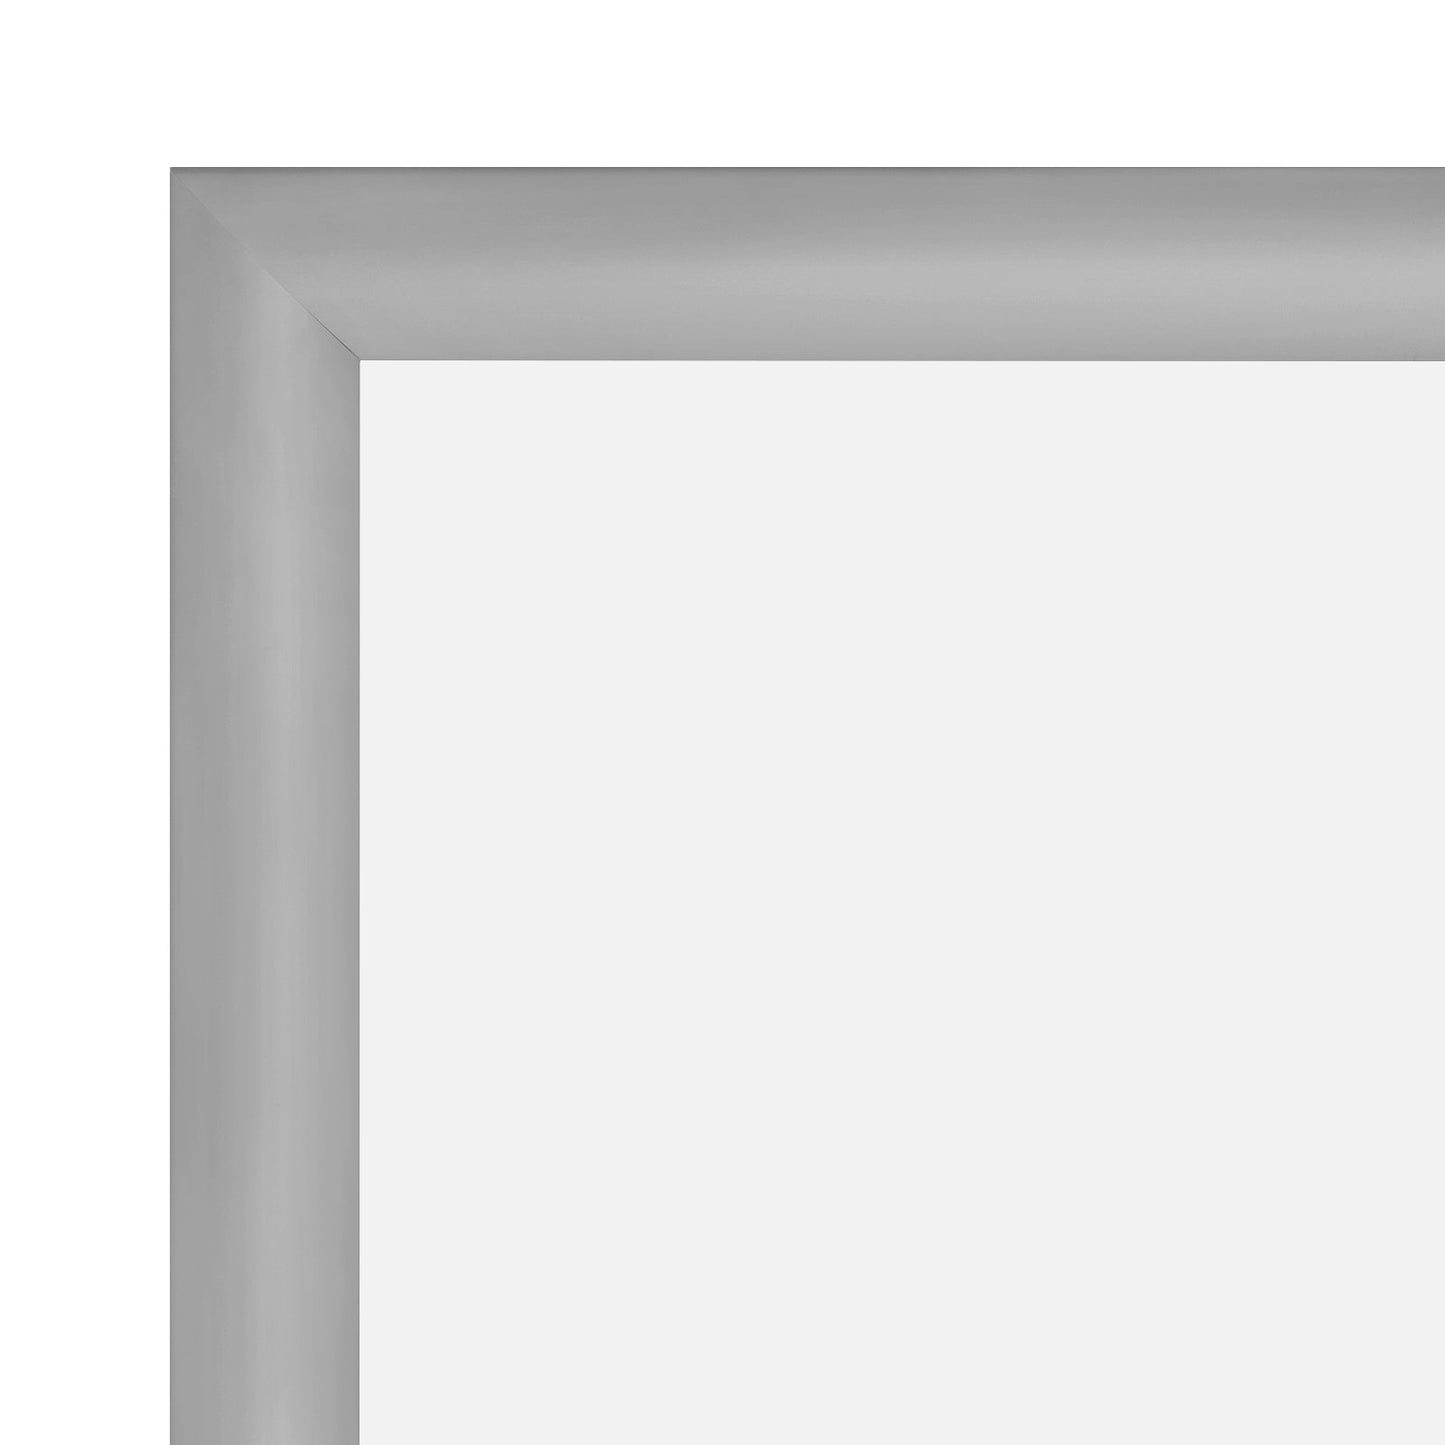 27x37 Silver SnapeZo® Snap Frame - 1.2" Profile